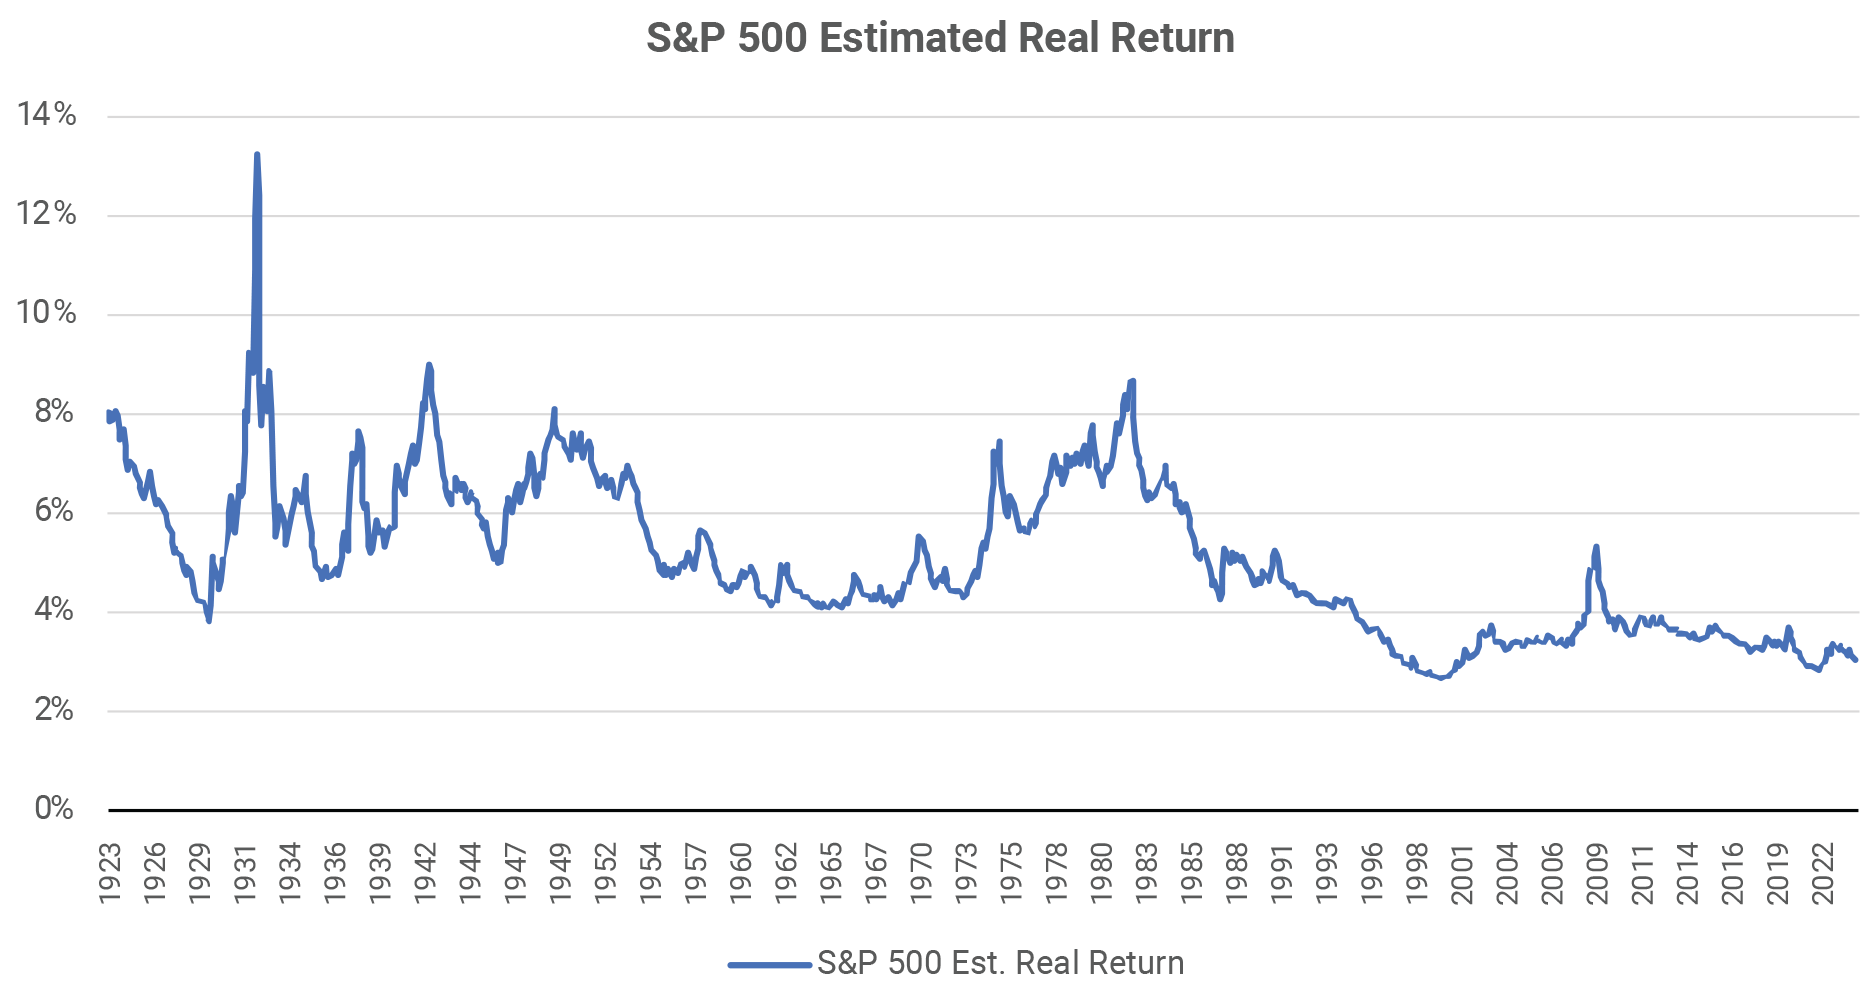 S&P 500 Estimated Real Return